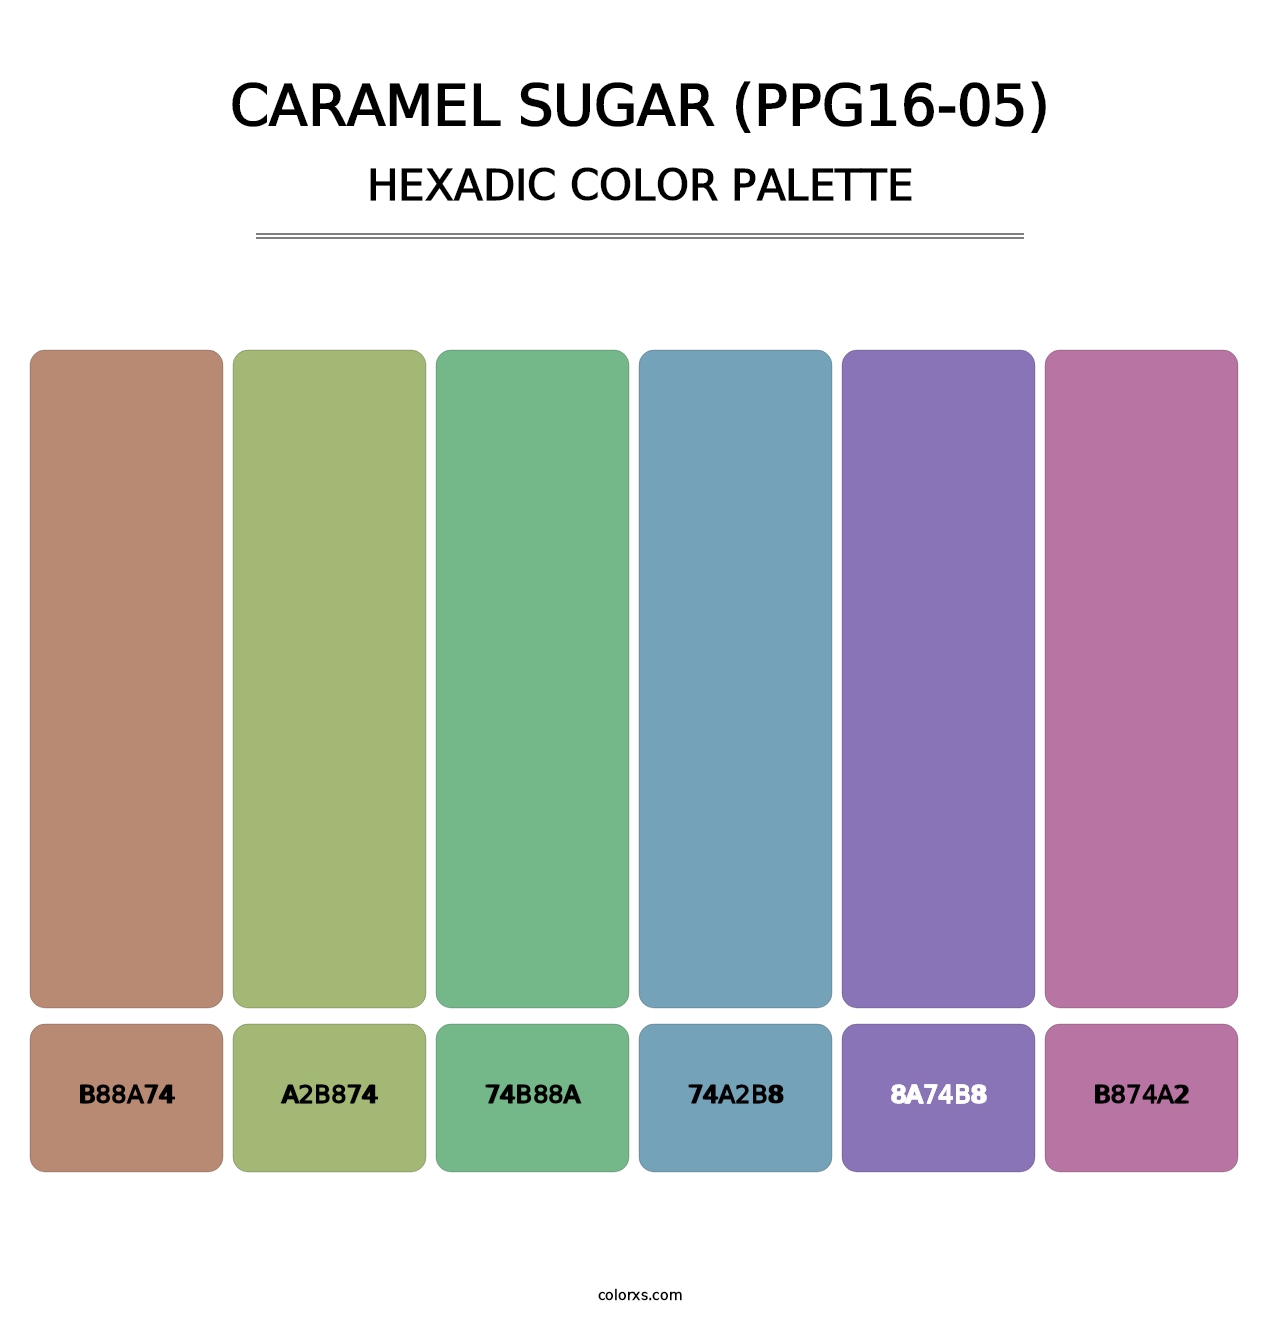 Caramel Sugar (PPG16-05) - Hexadic Color Palette